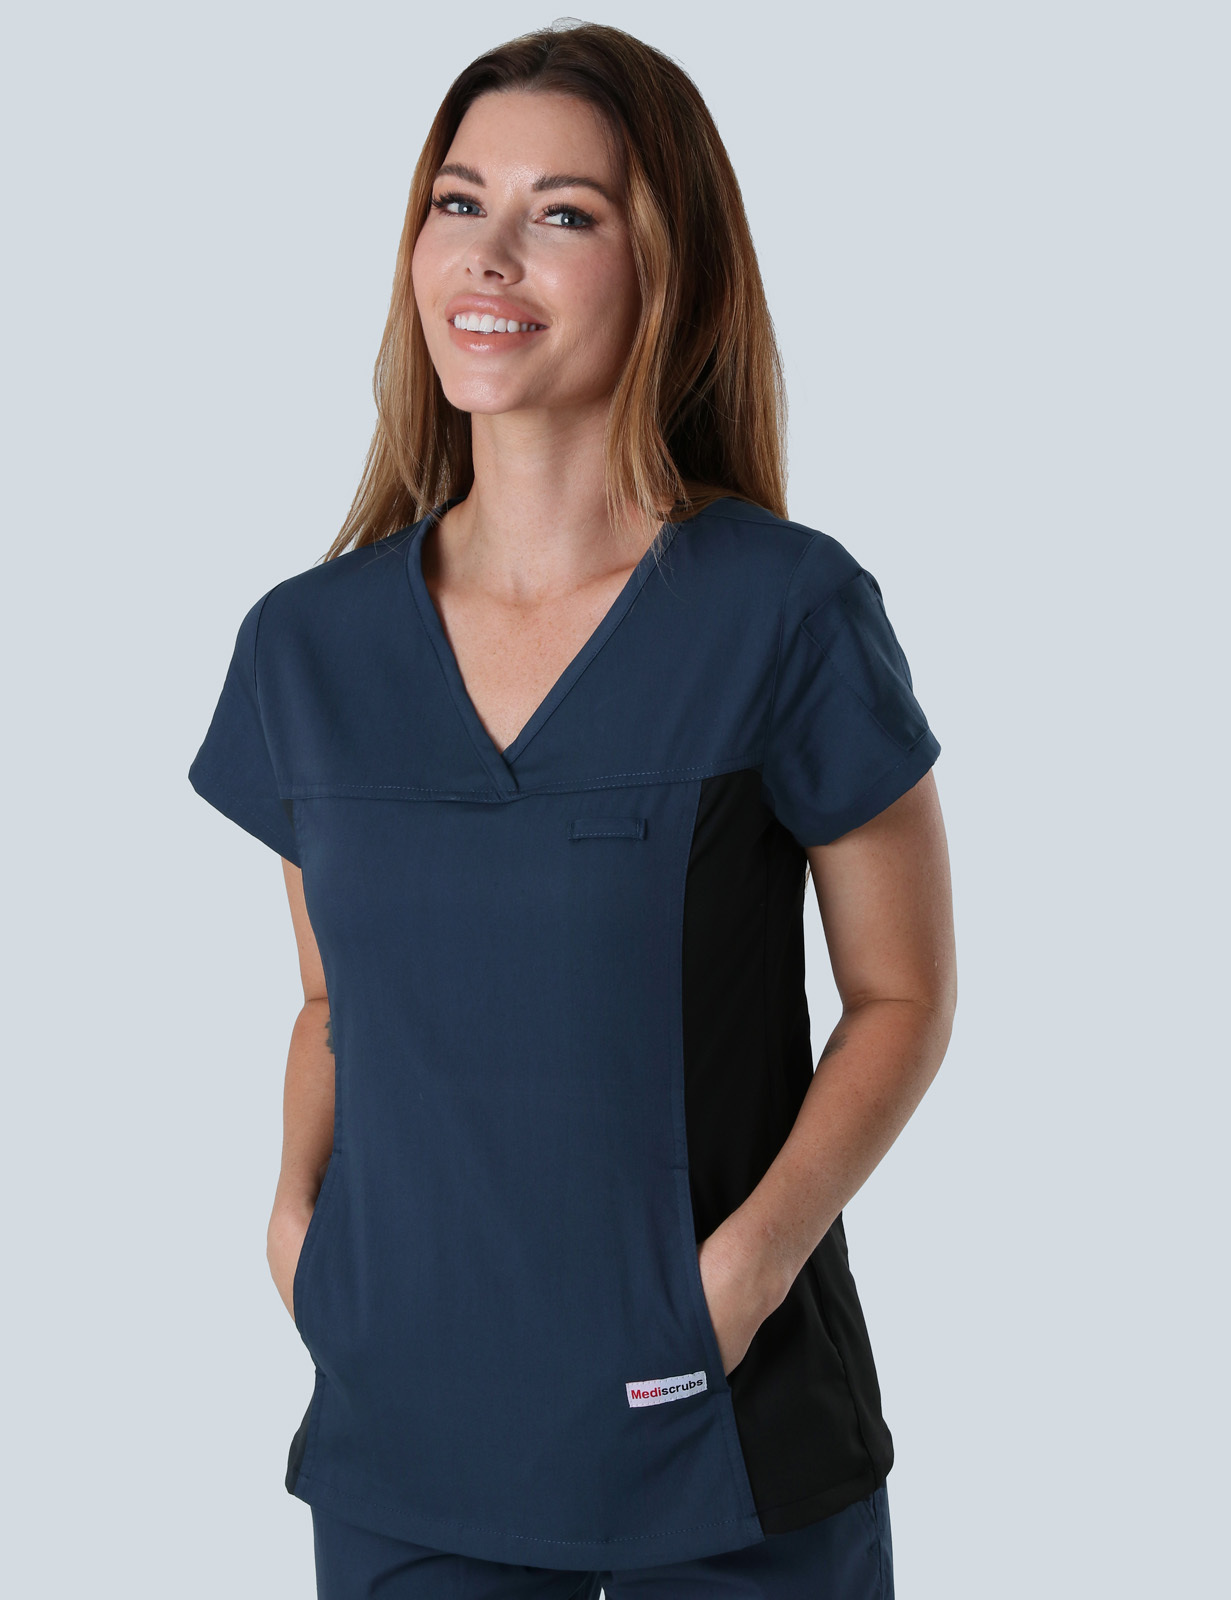 Northern hospital - ED Nurse (Women's Fit Spandex Scrub Top in Navy incl Logos)